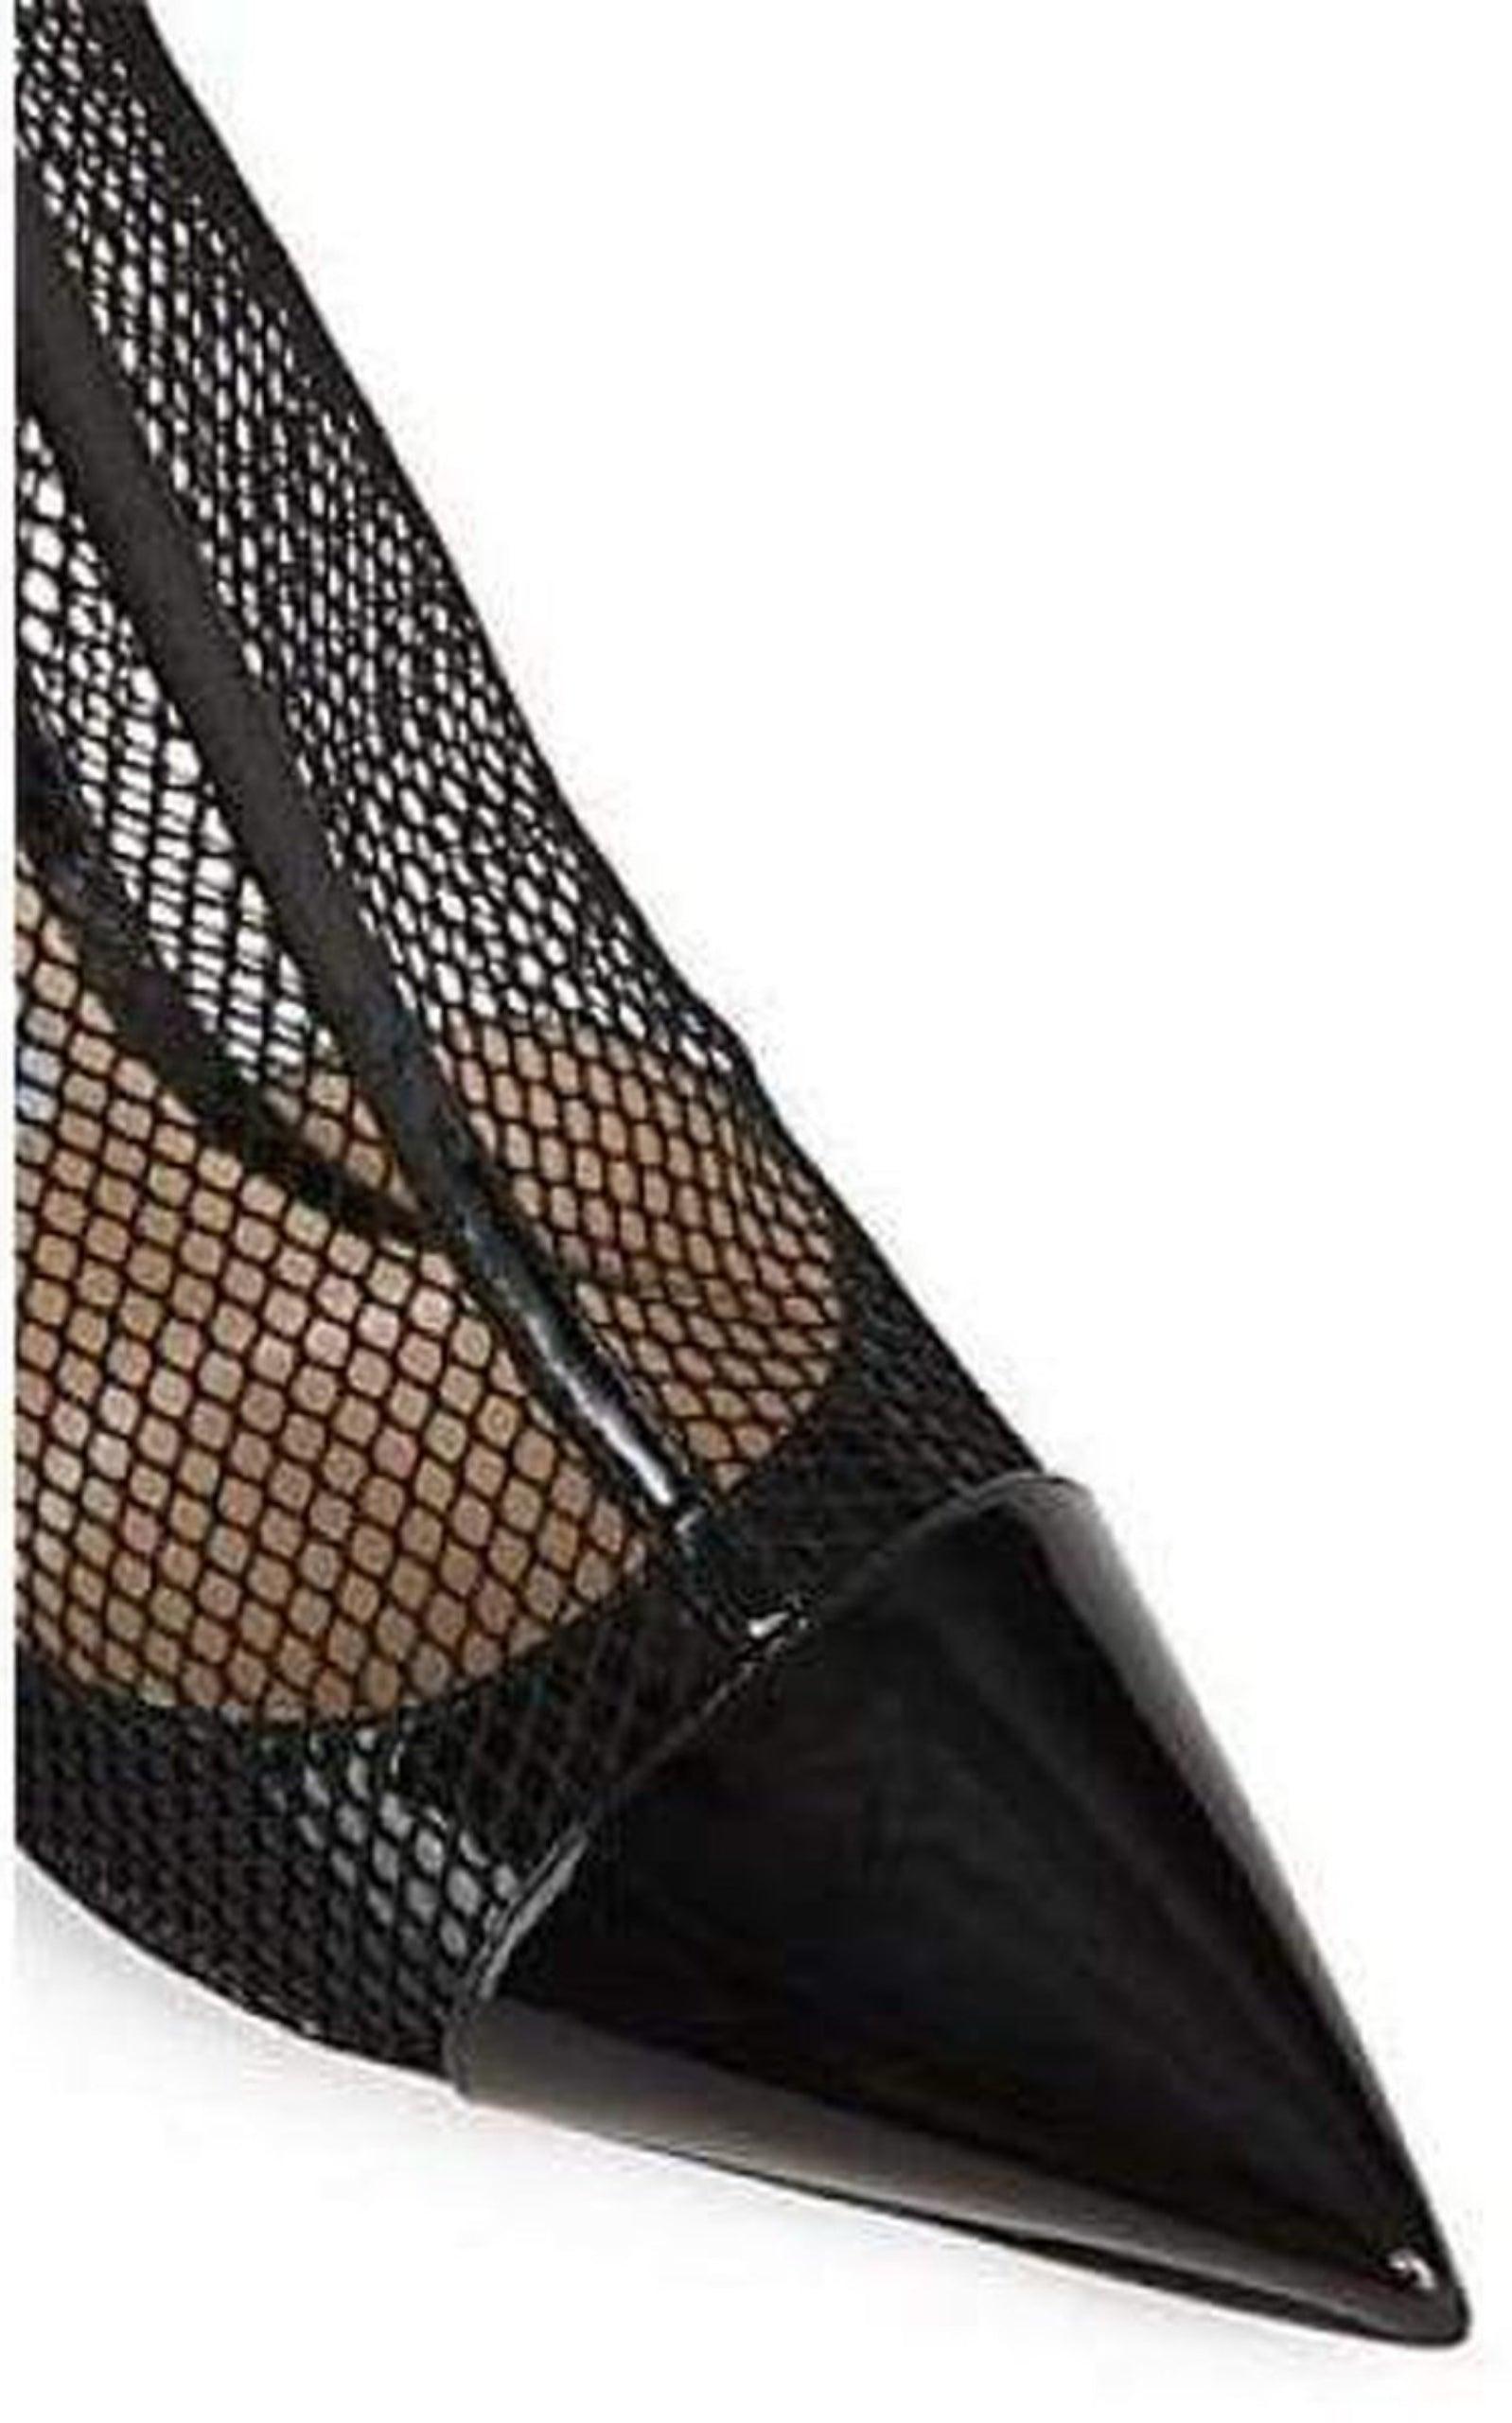 Kix 100 Fishnet Patent Leather Ankle Boots